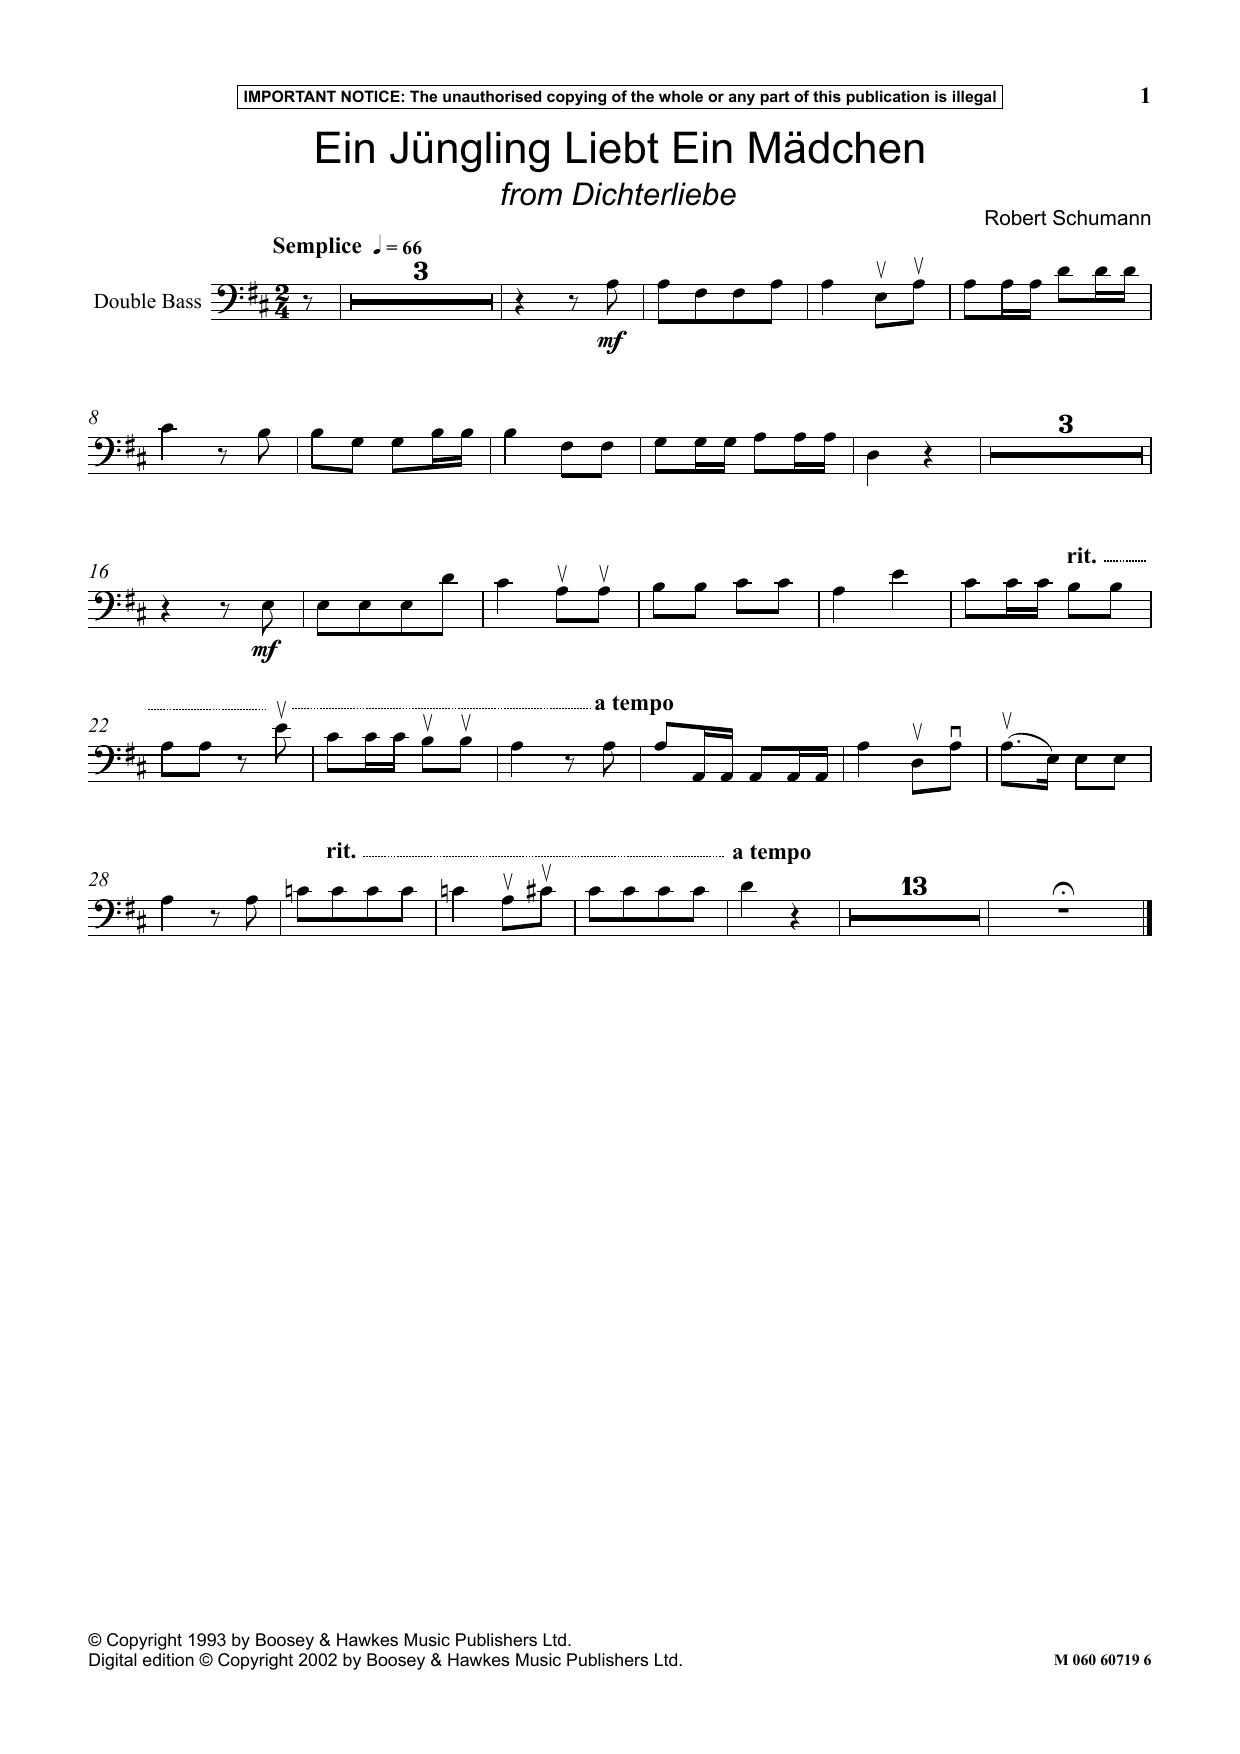 Download Robert Schumann Ein Jungling Liebt Ein Madchen from Dichterliebe Sheet Music and learn how to play Instrumental Solo PDF digital score in minutes